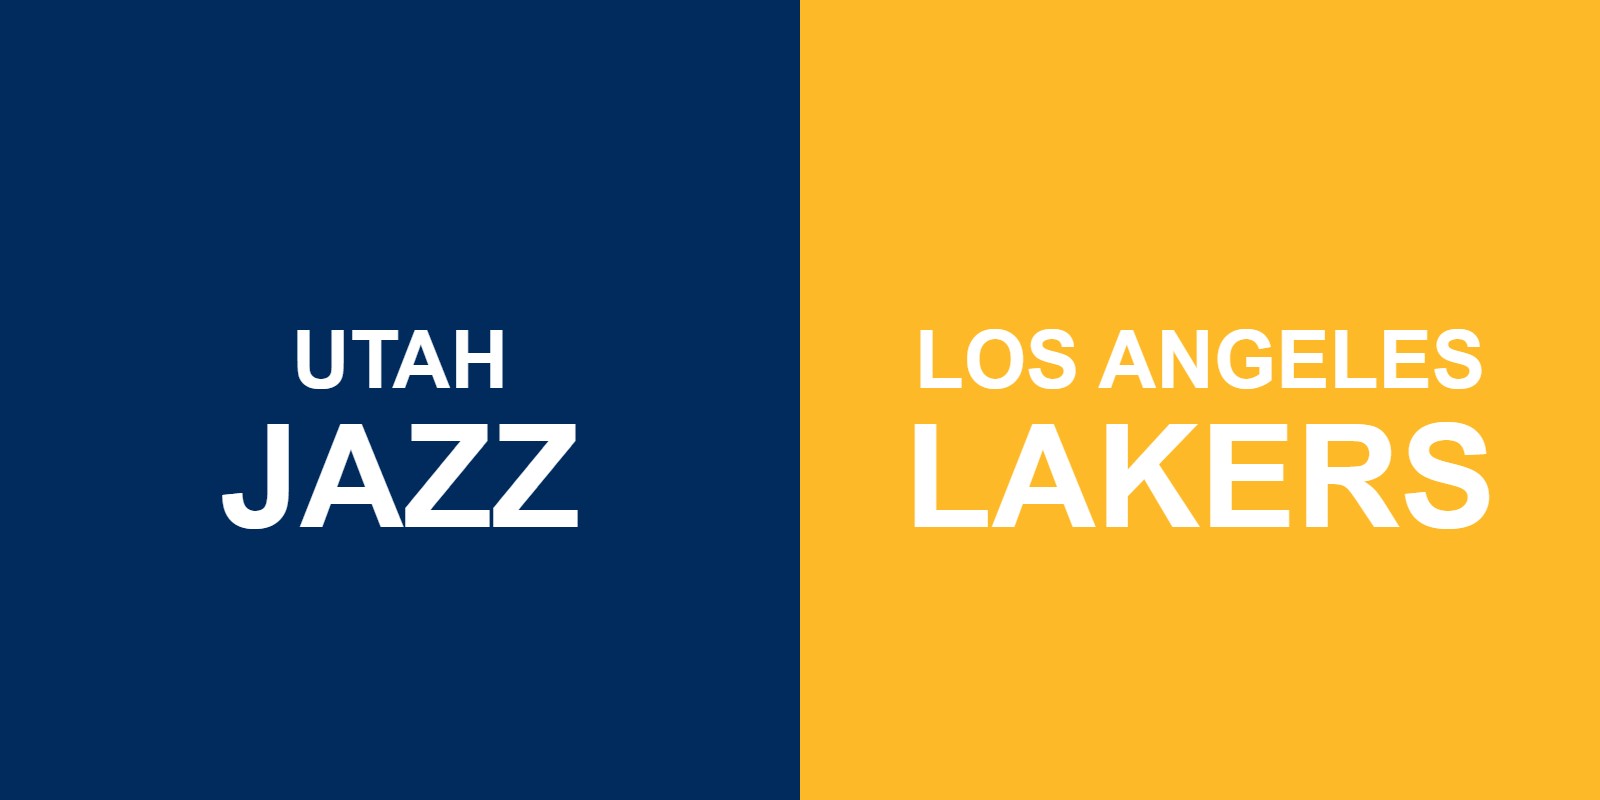 Jazz vs Lakers